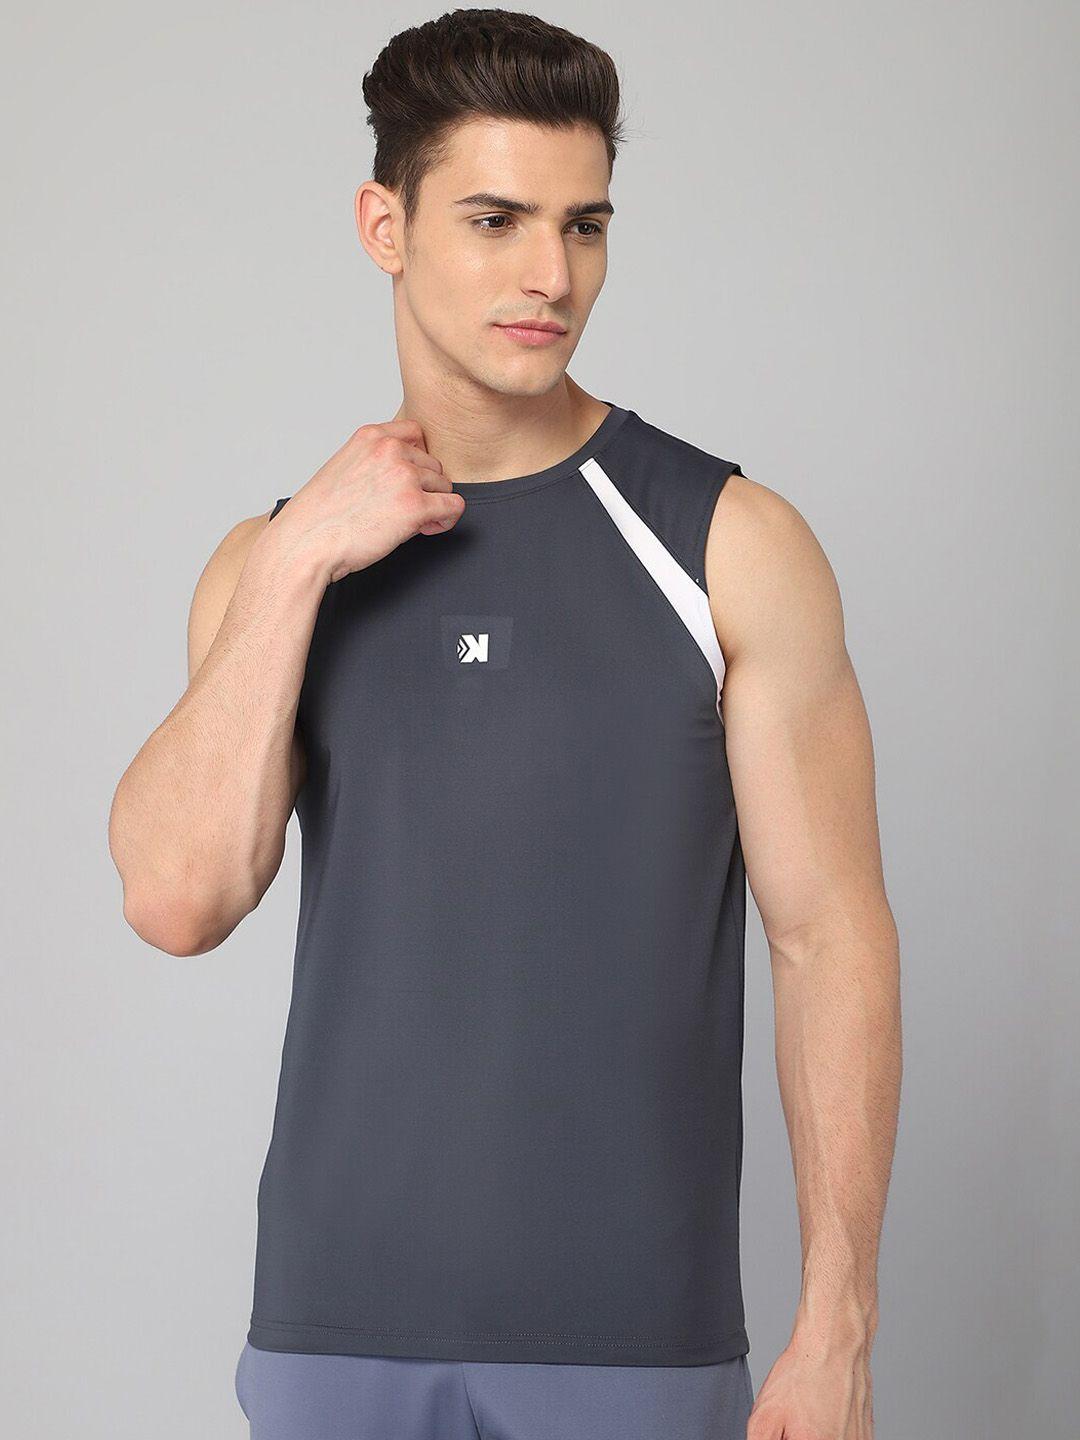 jackdanza-men-grey-&-white-appolo-sleeveless-gym-vest